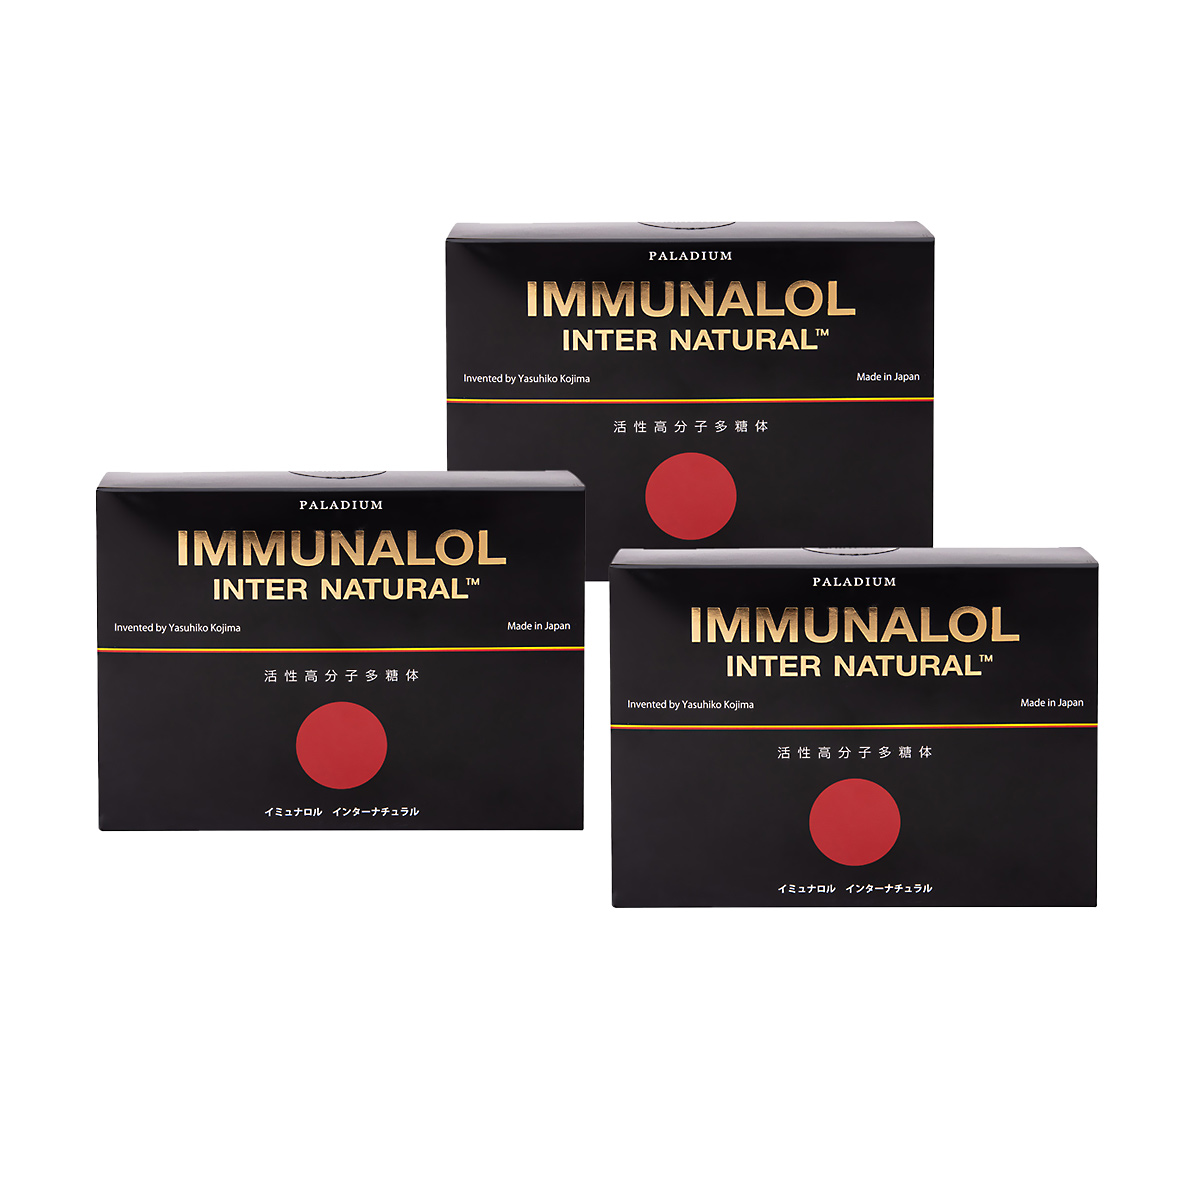 Immunalol Inter Natural, саше (3 уп. по 30 шт.)